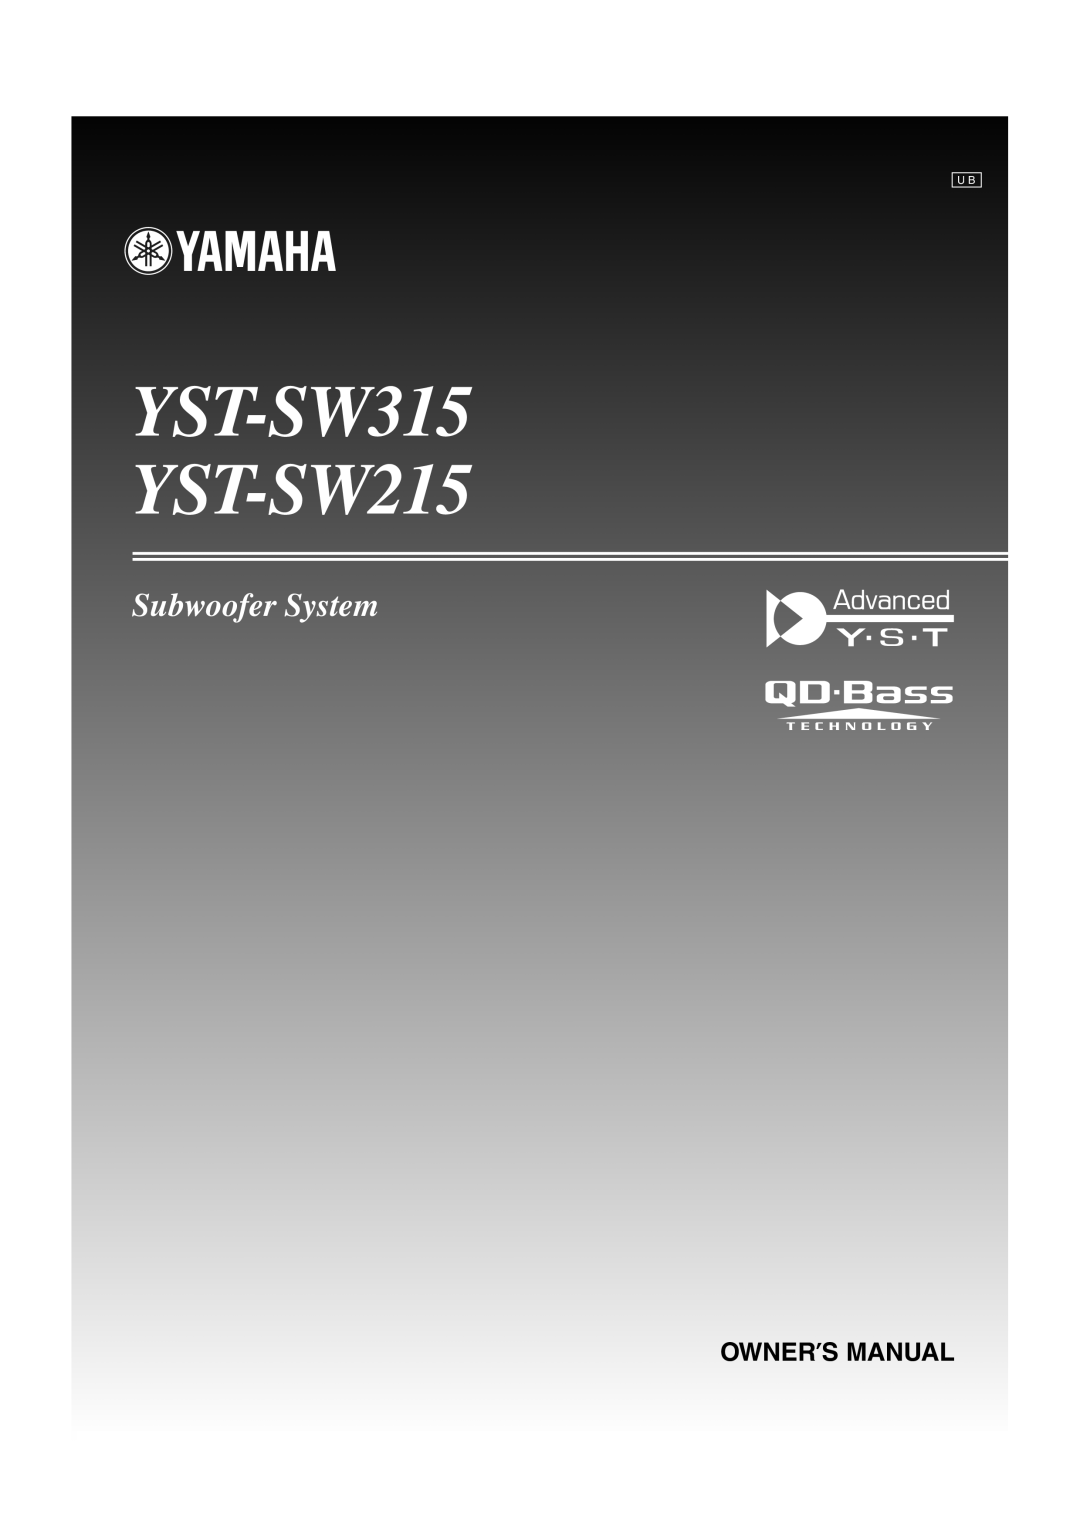 Yamaha HTR-5940 AV owner manual YST-SW315 YST-SW215, Subwoofer System, Owners Manual 